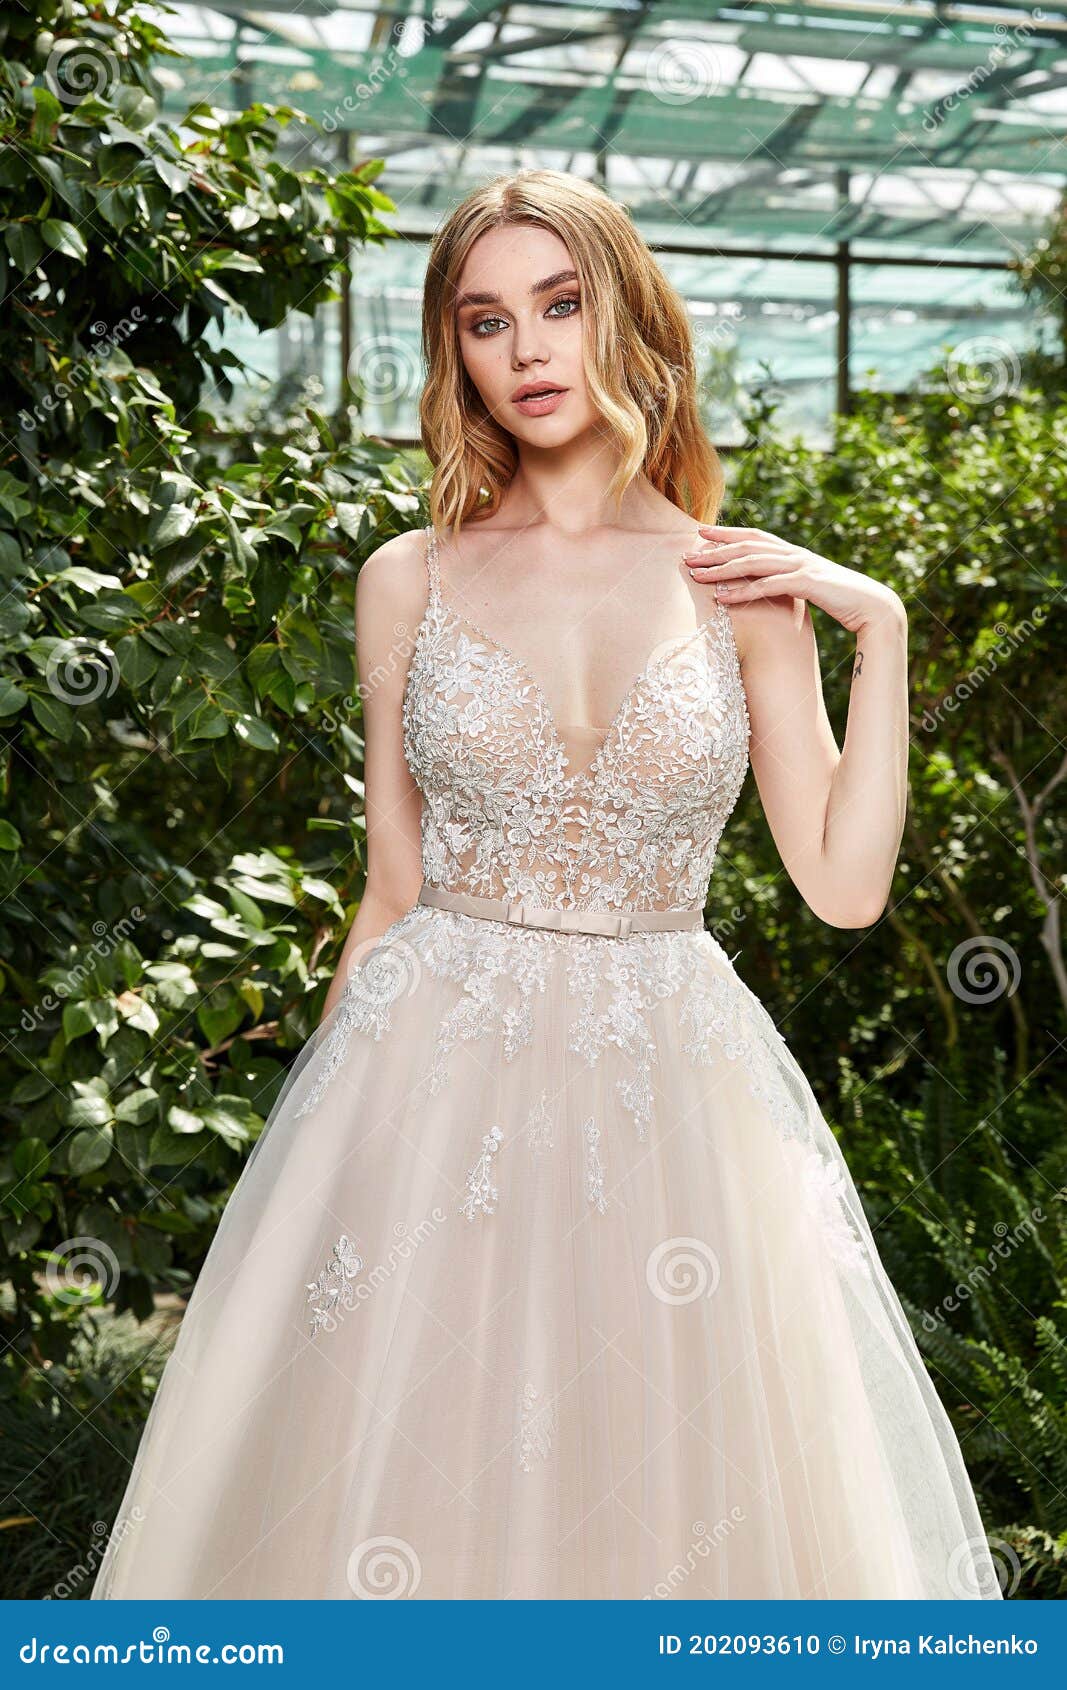 beautiful woman bride in long white wedding dress espousal fashion marriage celebration big day in green park garden backyard